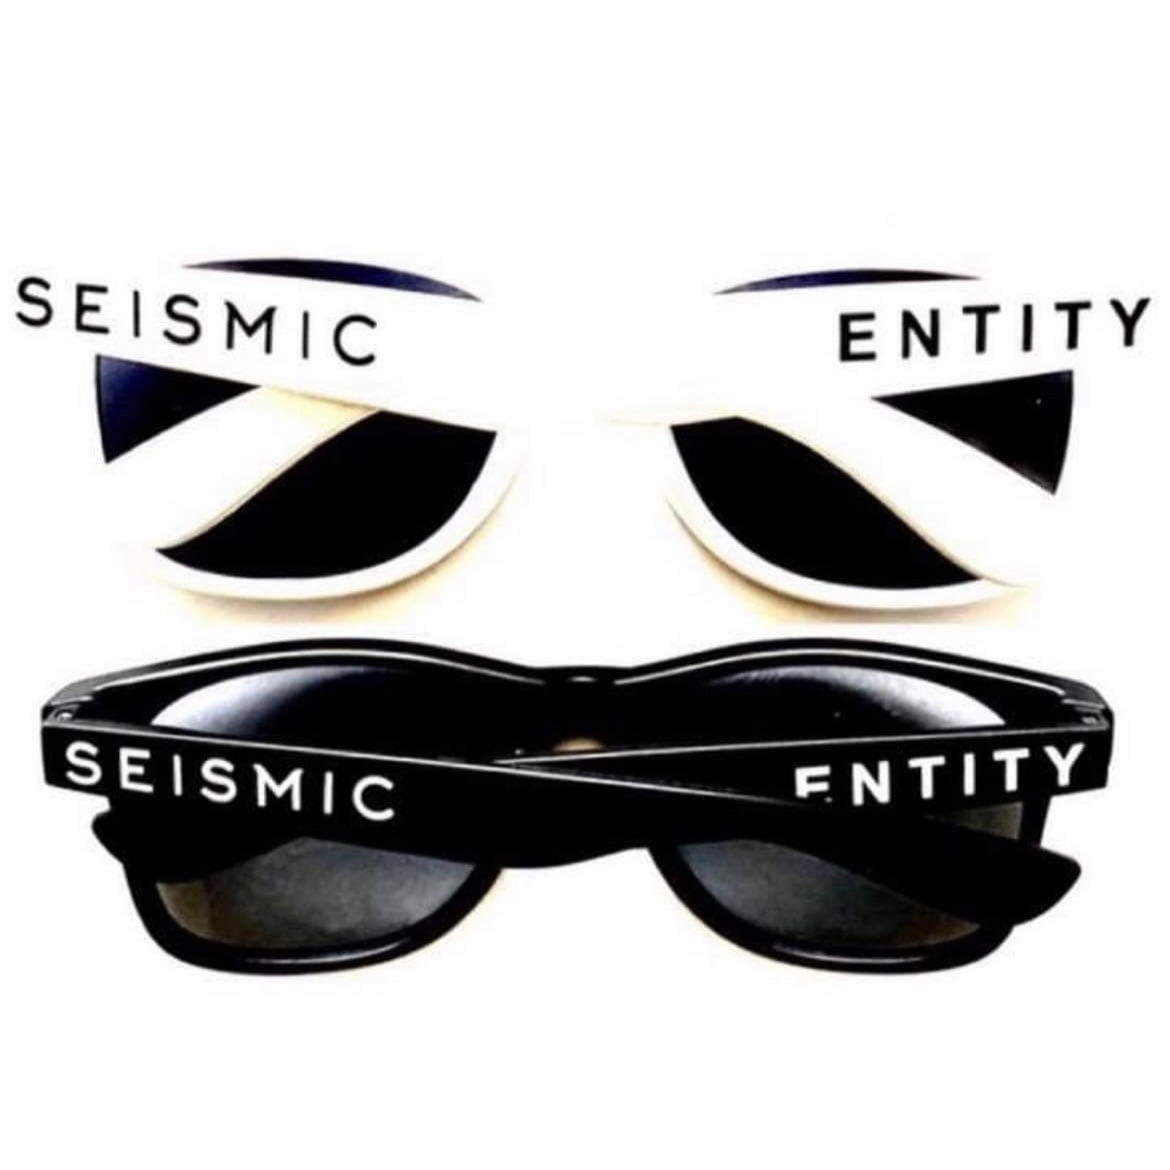 Seismic Entity Sunglasses